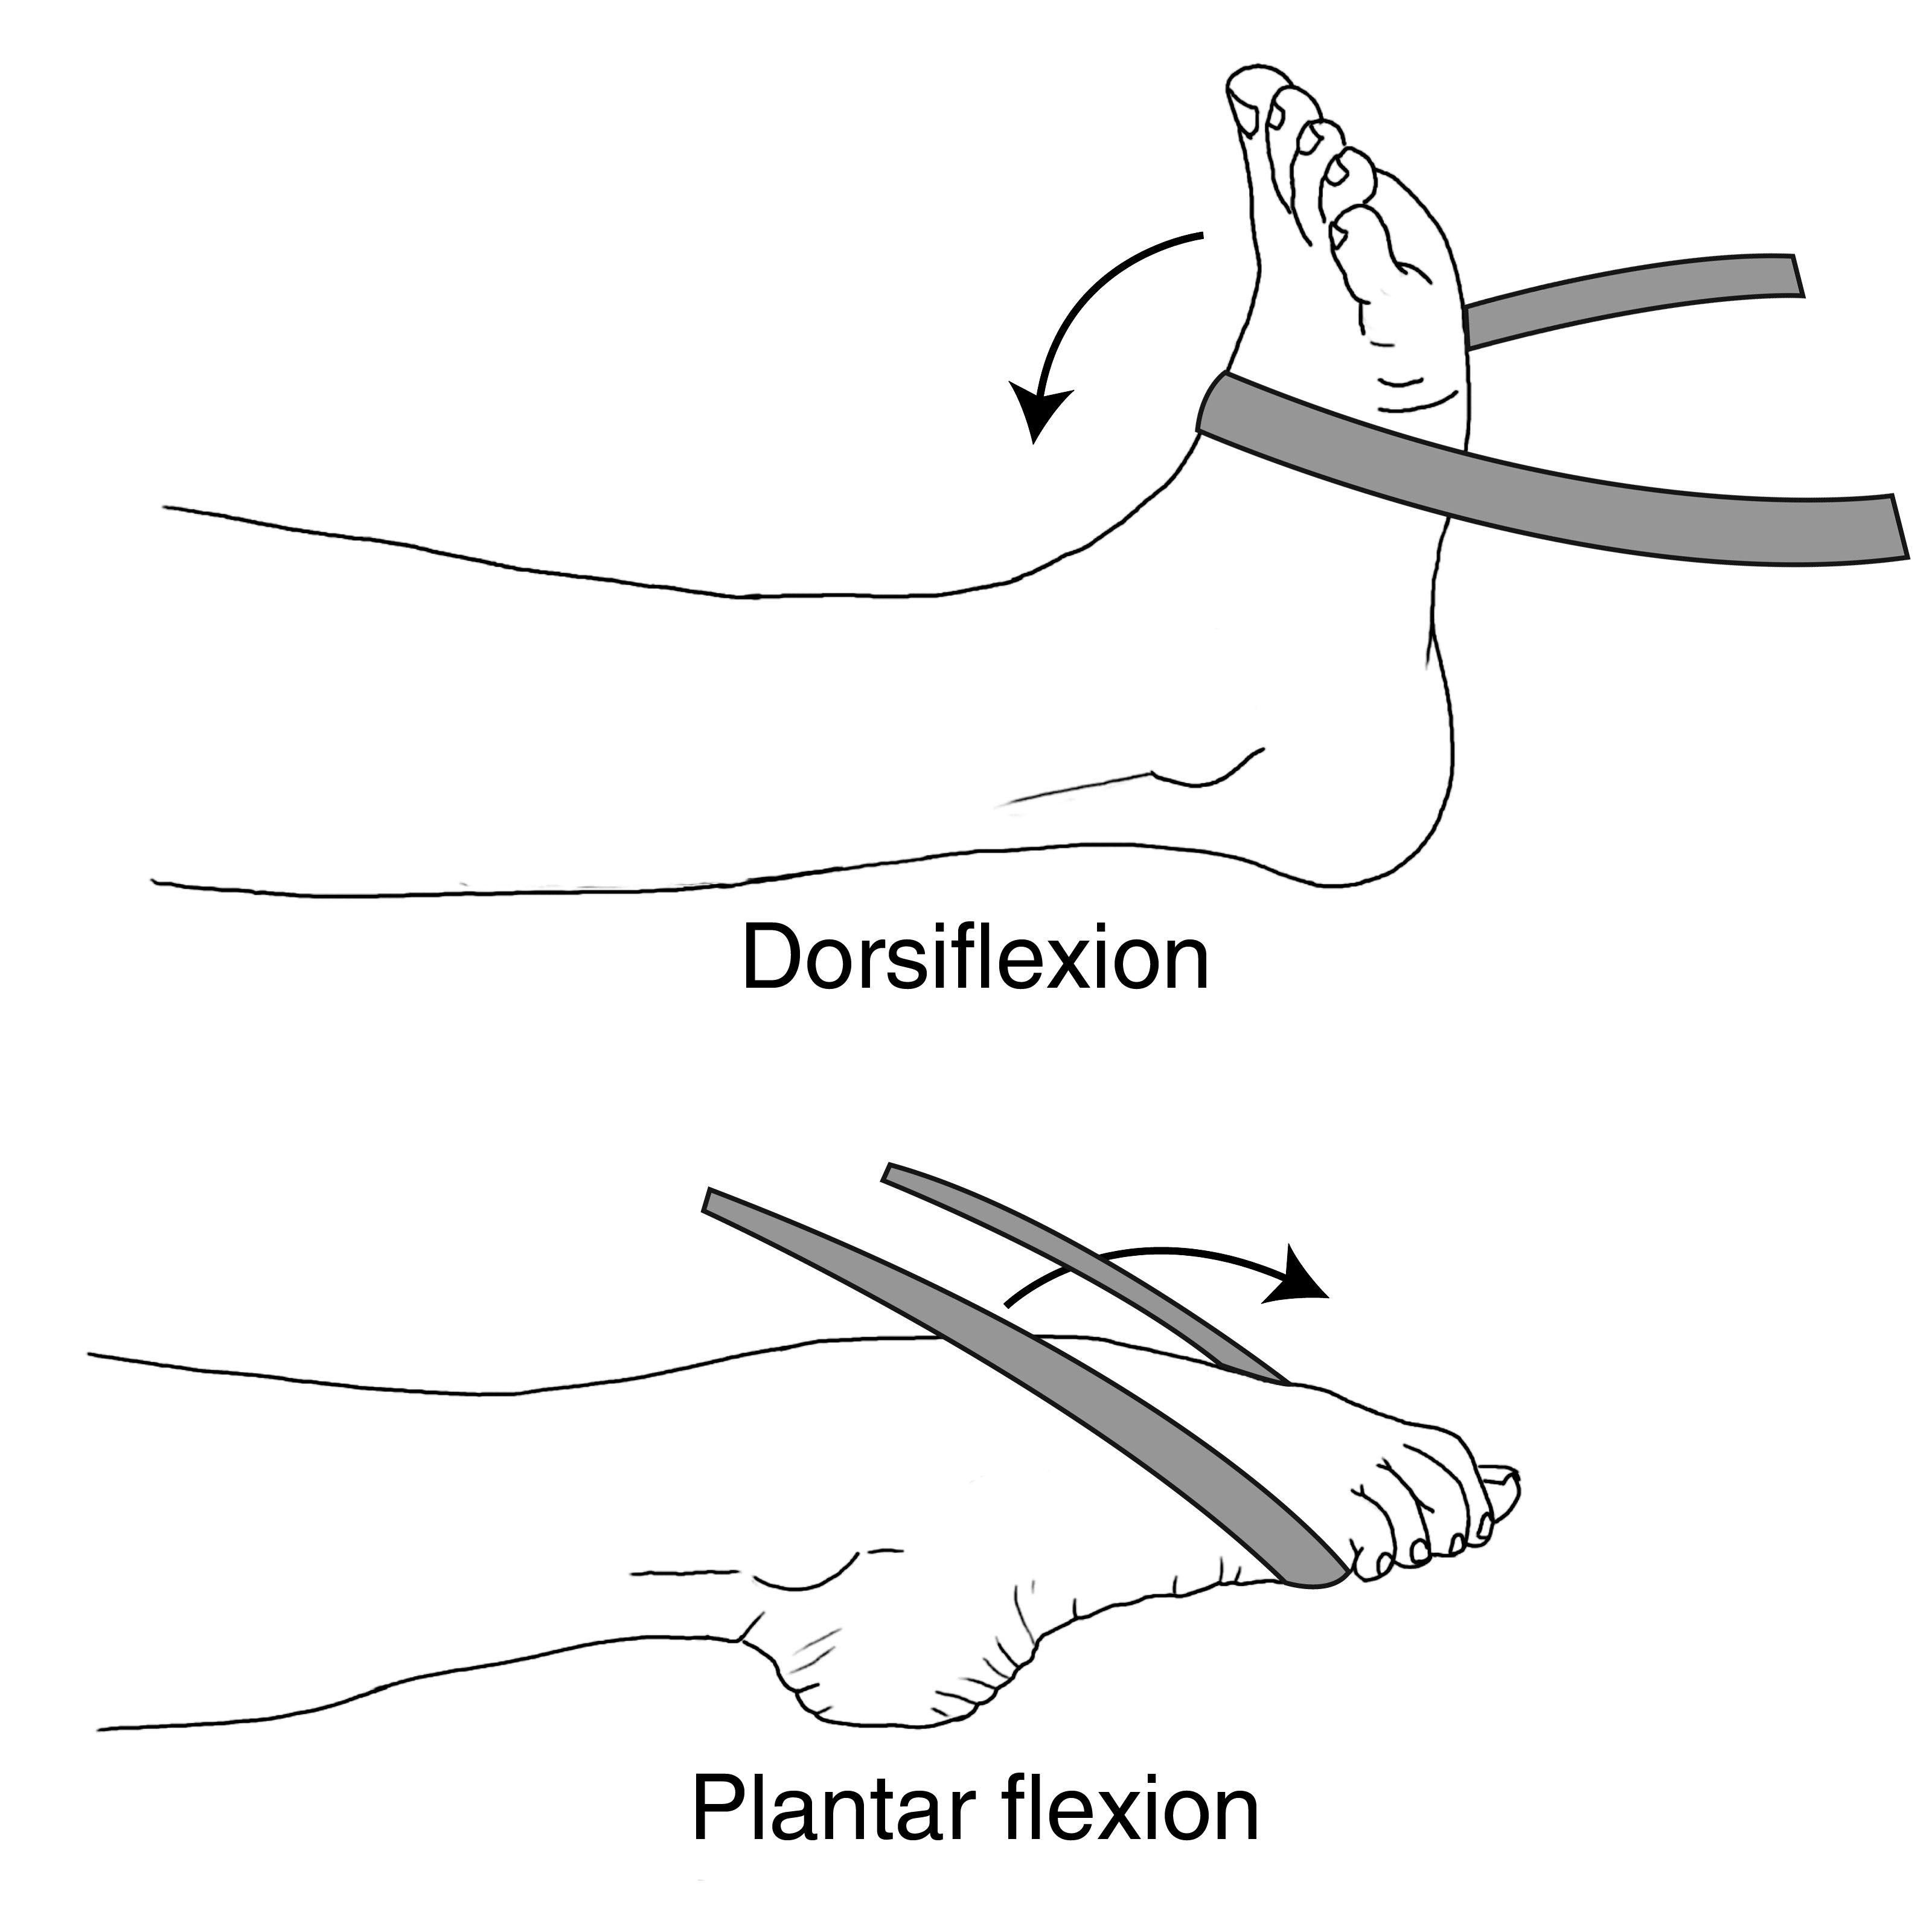 Ankle dorsiflexion/plantar flexion